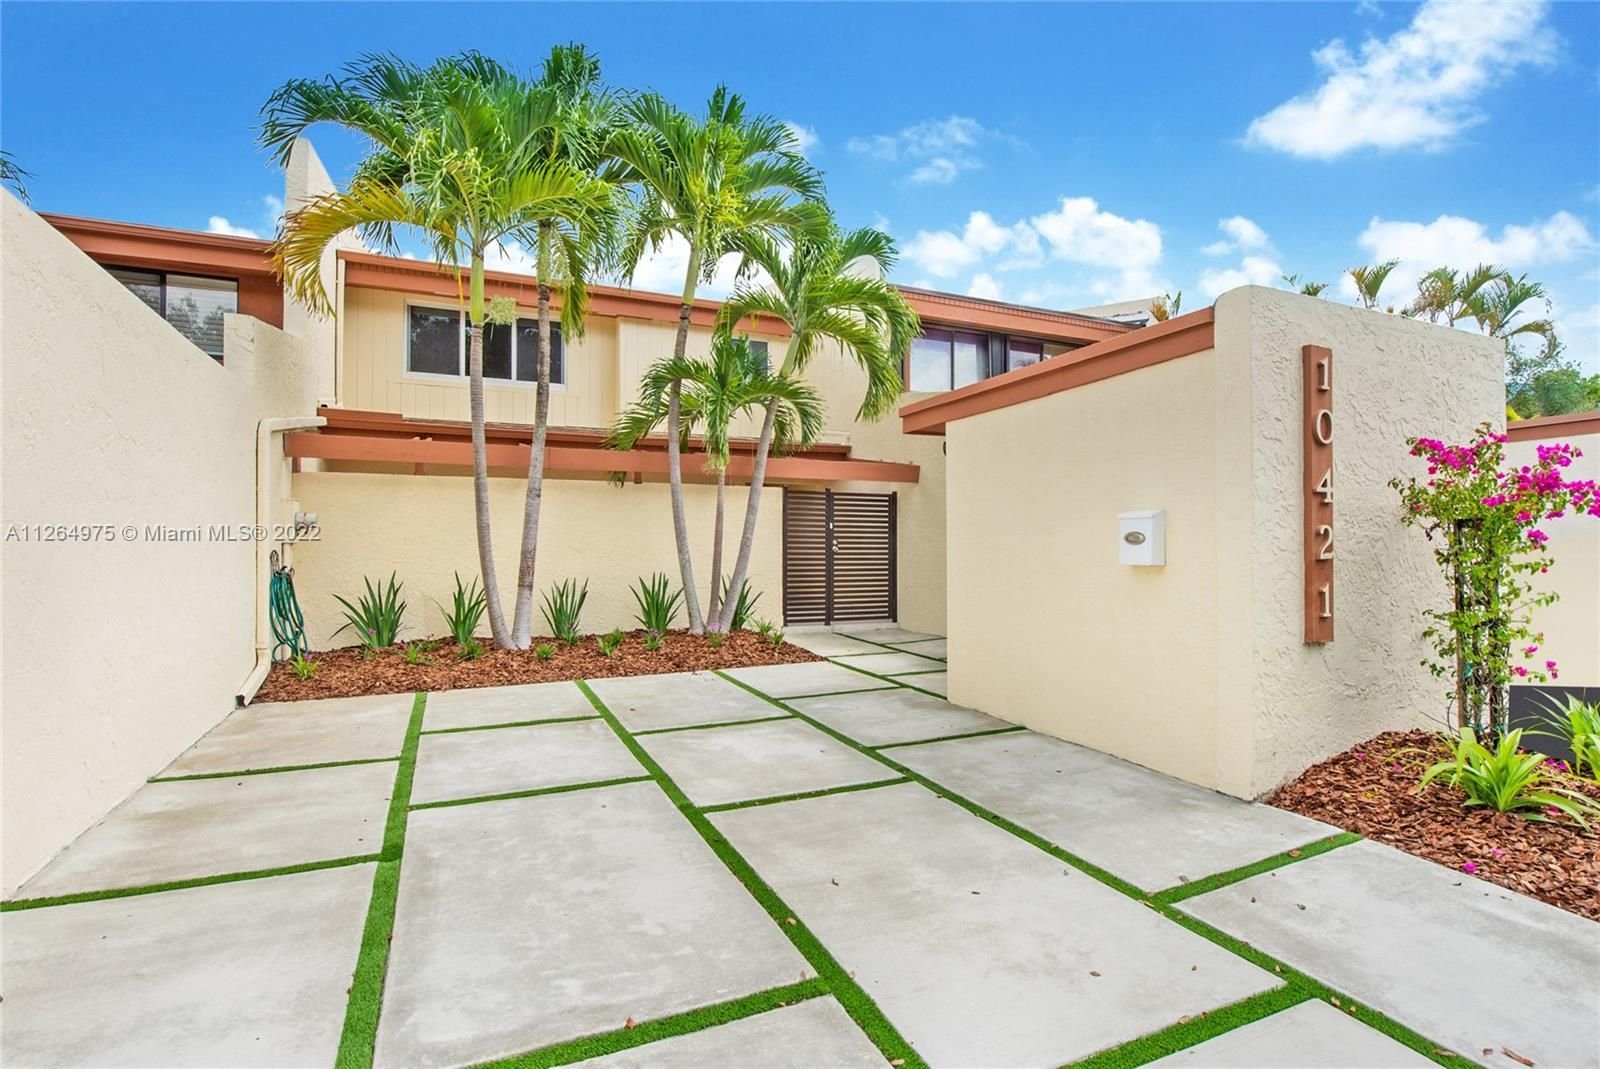 Real estate property located at 10421 76th St, Miami-Dade County, Miami, FL